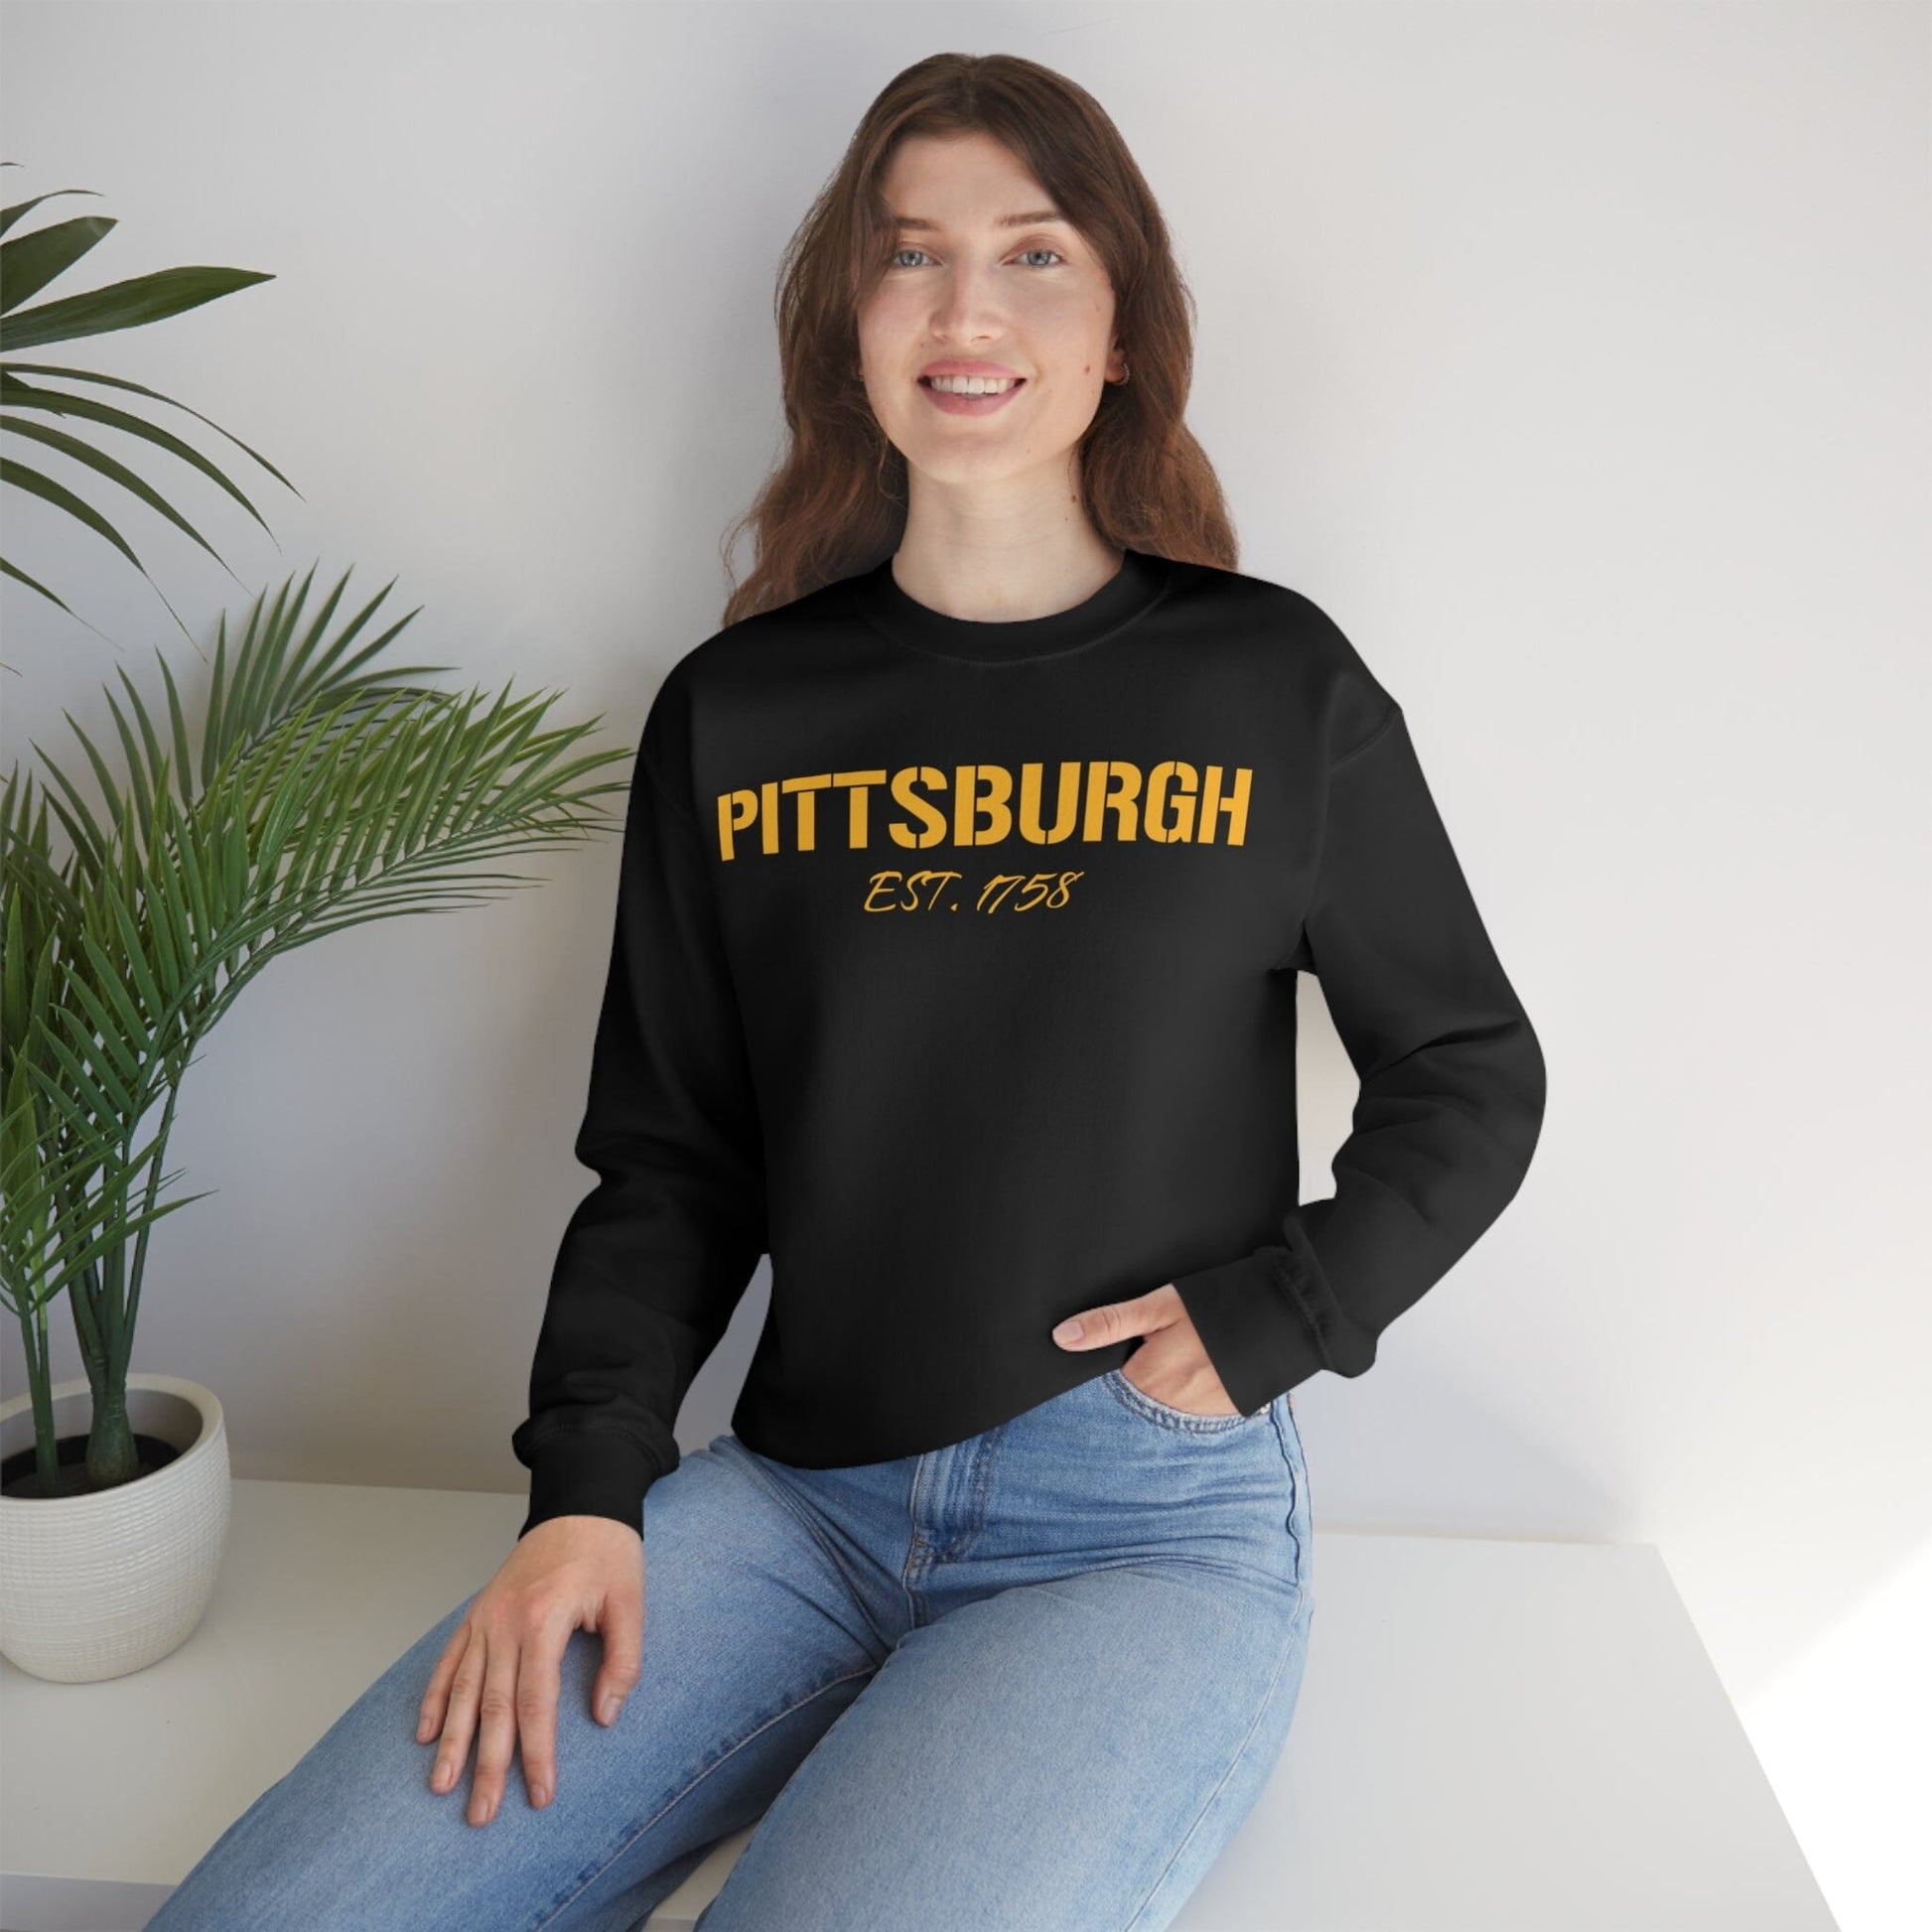 Pittsburgh EST 1758 Sweatshirt Sweatshirt Printify S Black 